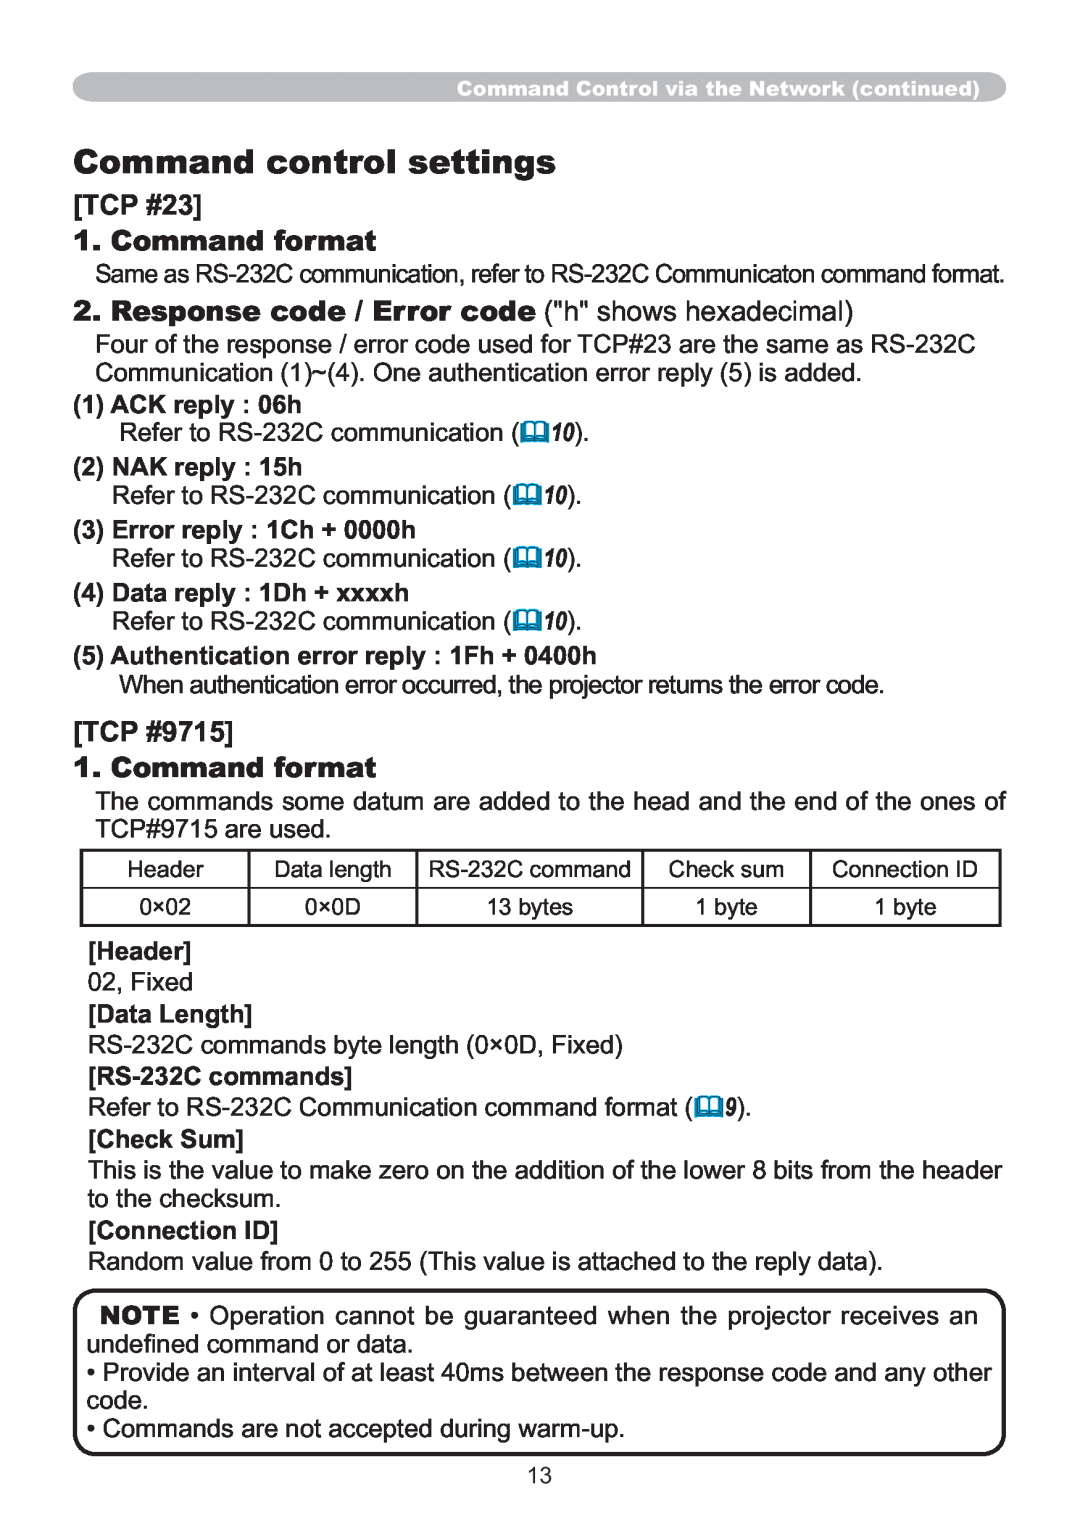 Hitachi IPJ-AW250N Command control settings, TCP #23 1. Command format, Response code / Error code h shows hexadecimal 